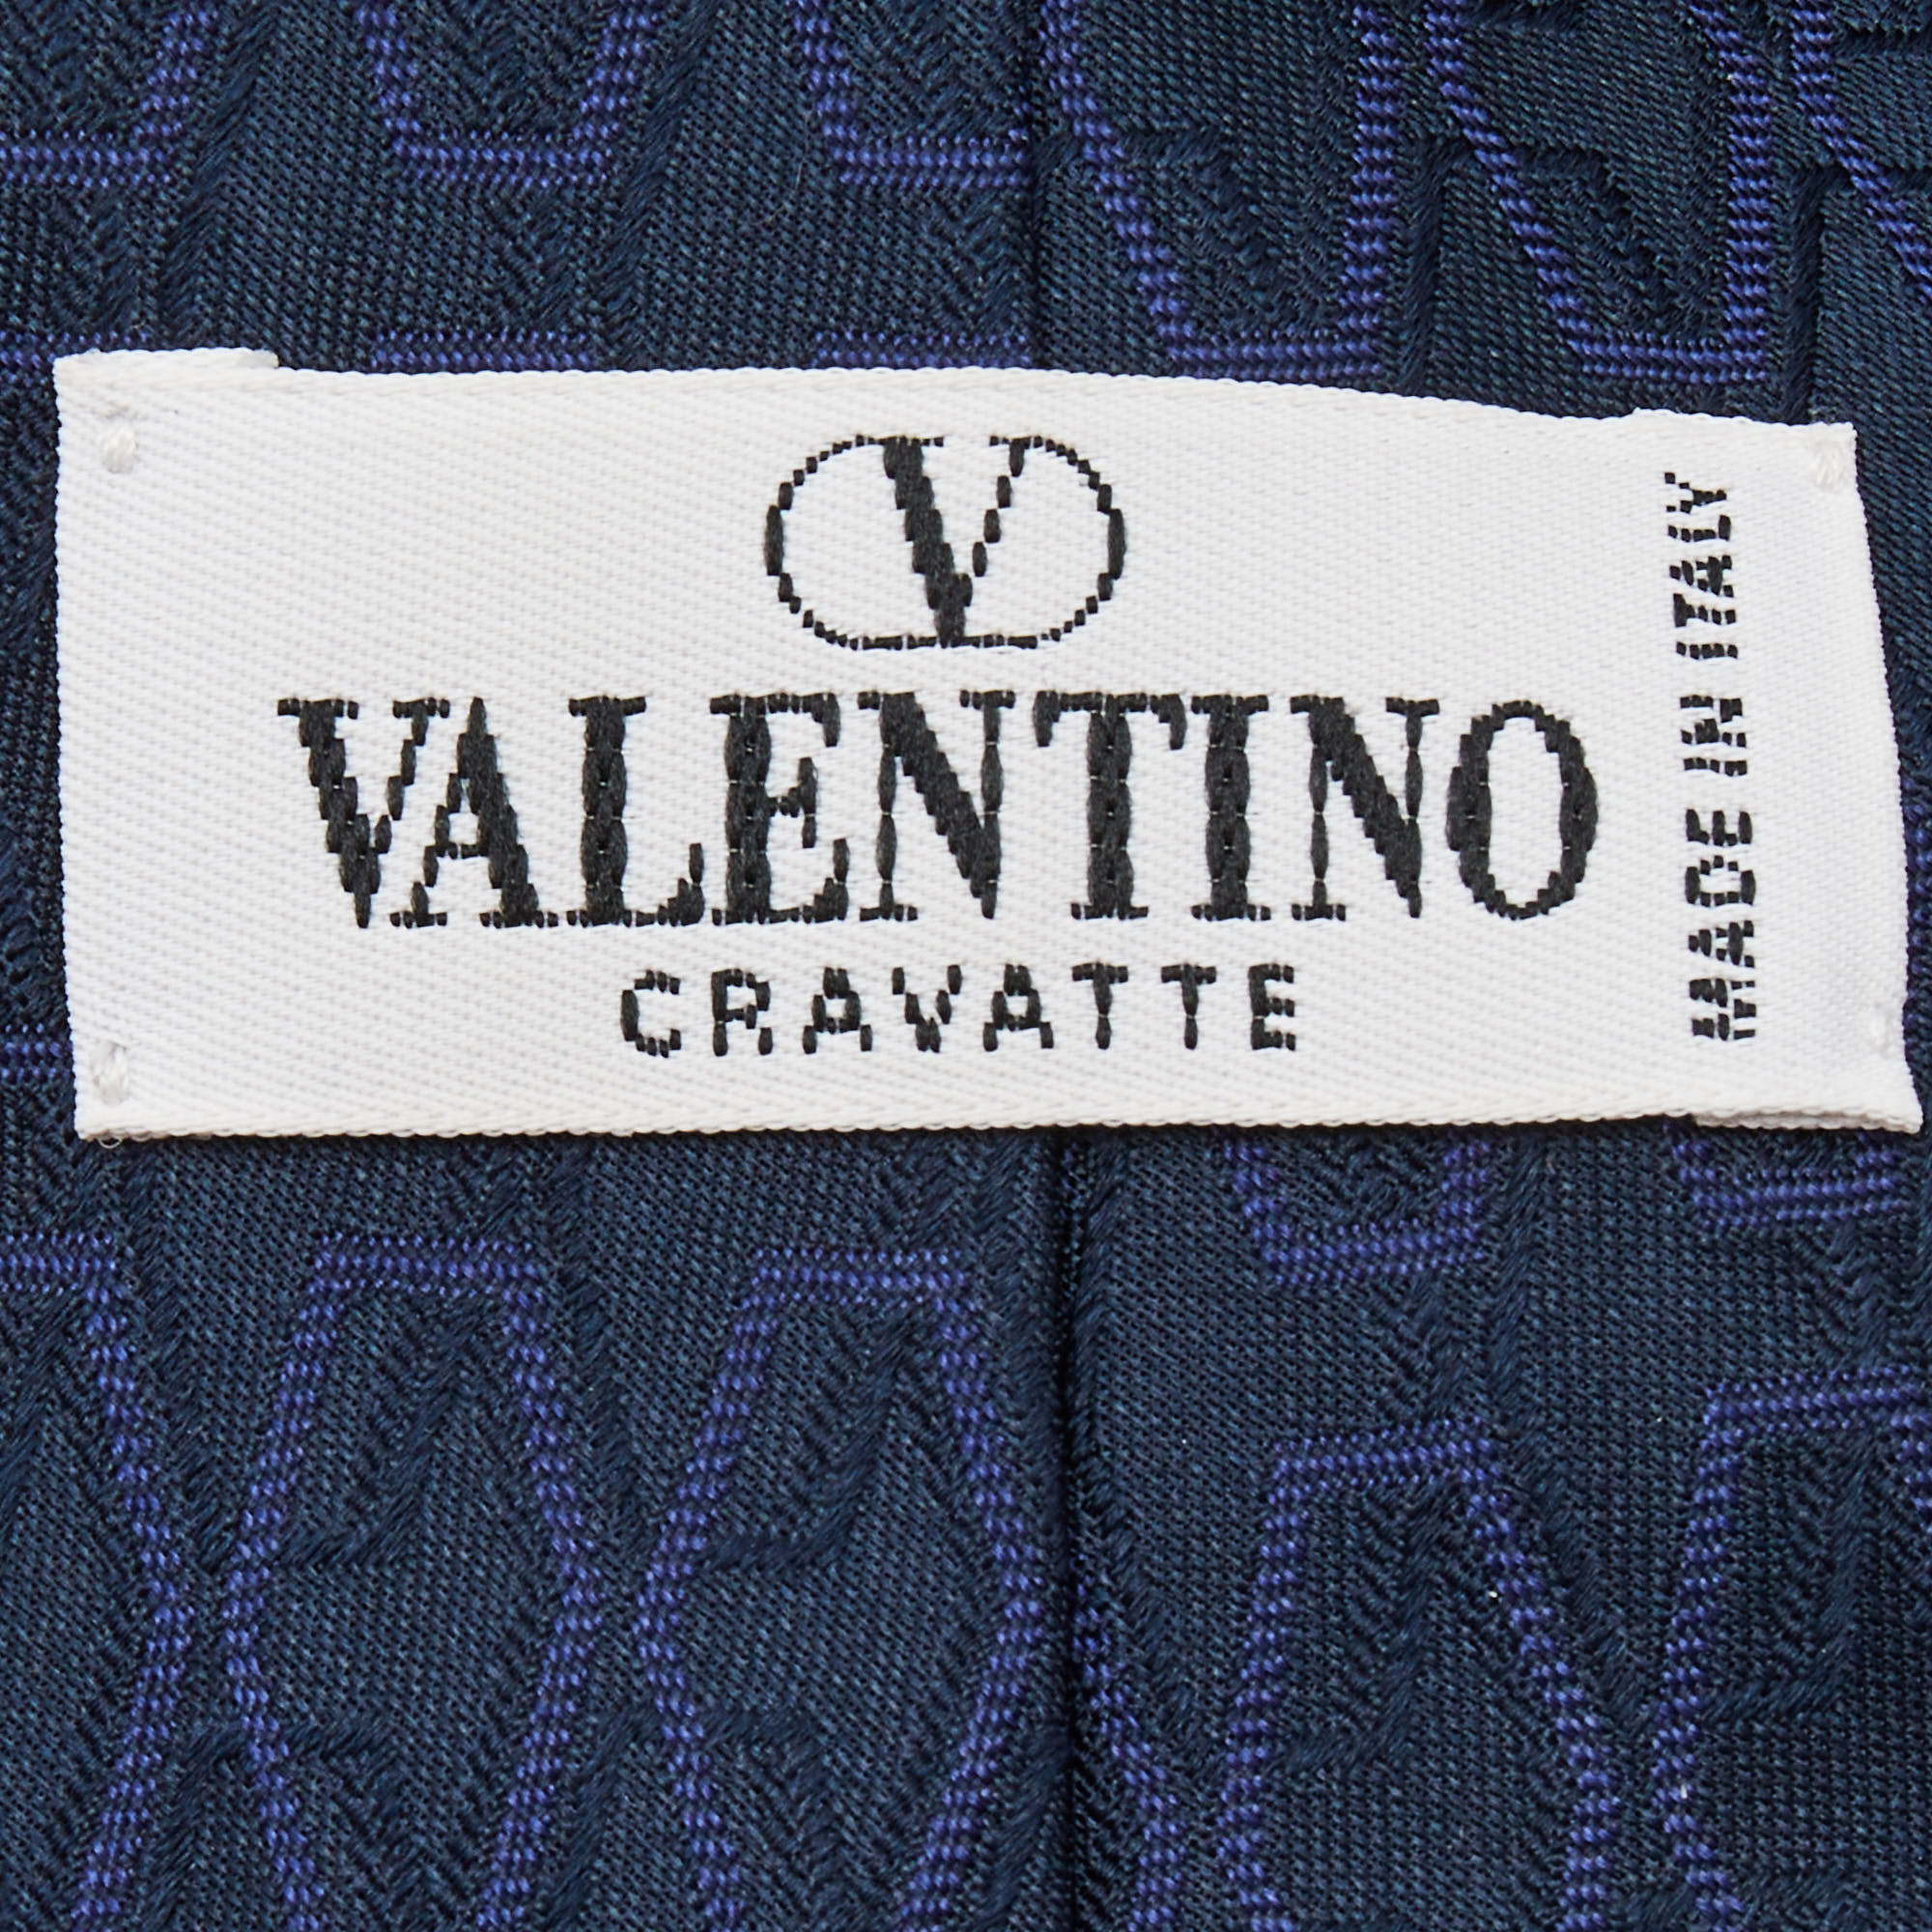 Valentino Navy Blue Patterned Silk Jacquard Tie